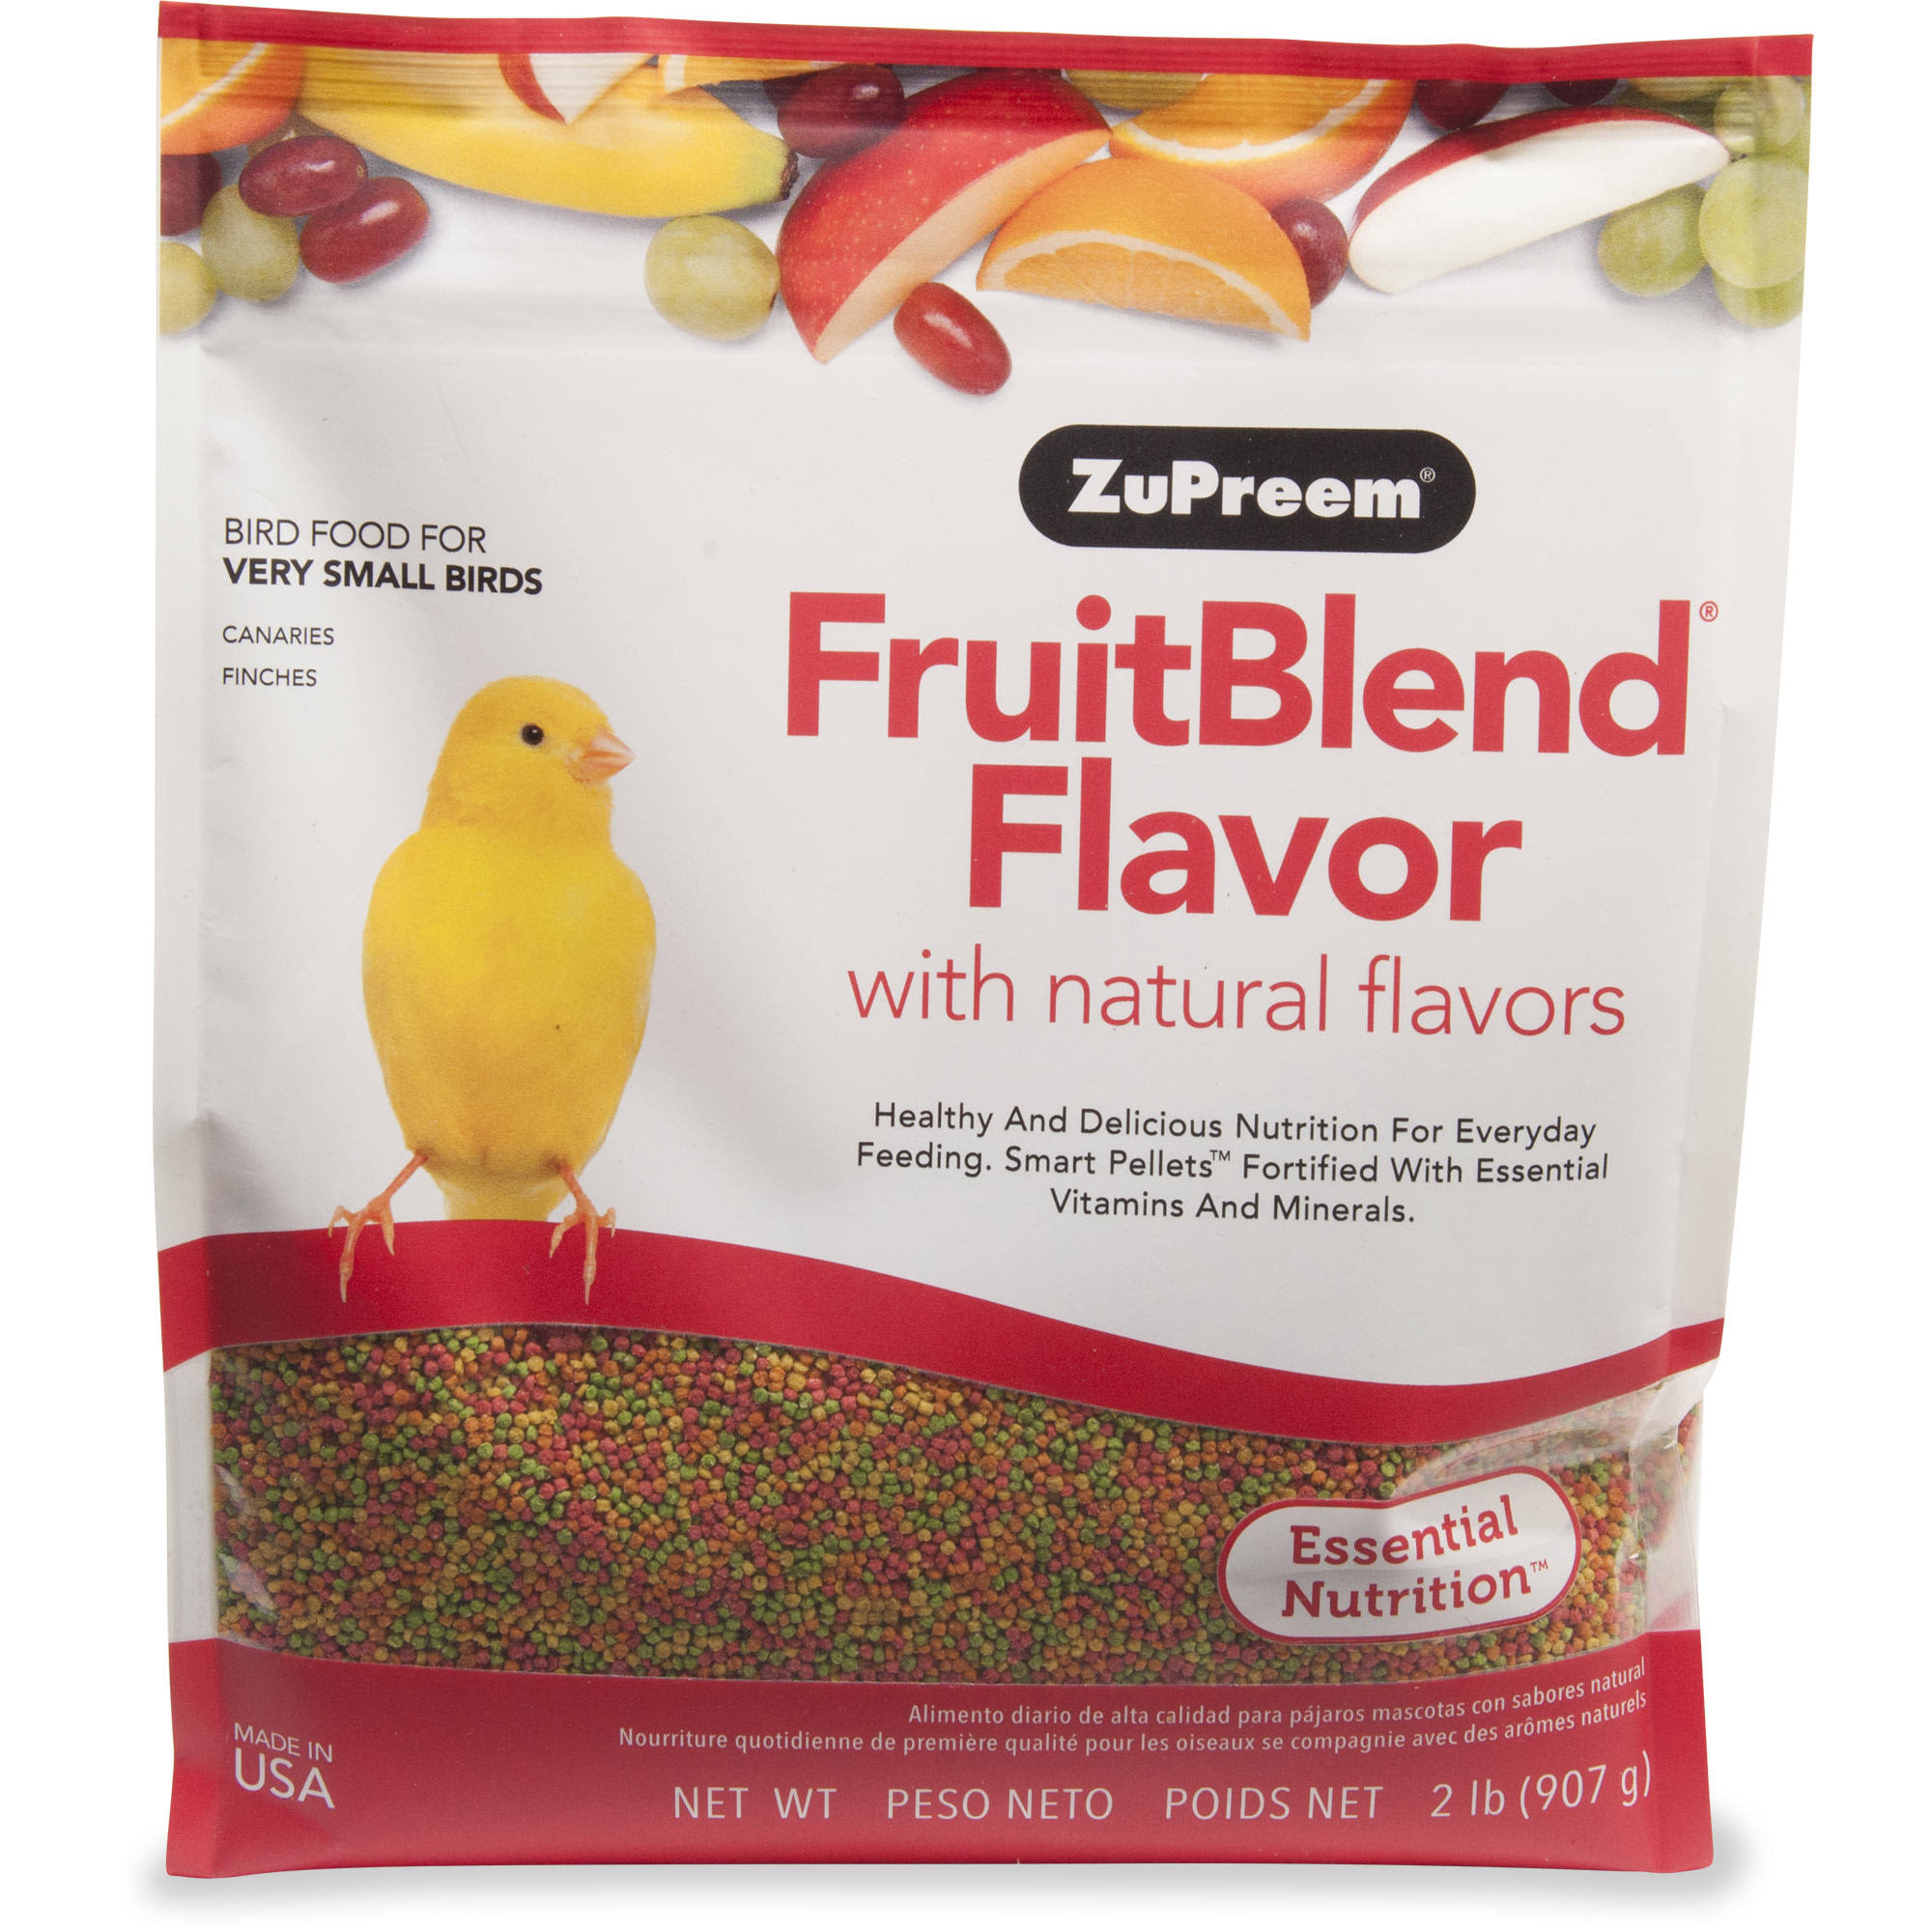 Zupreem Bird Food - Fruit Blend